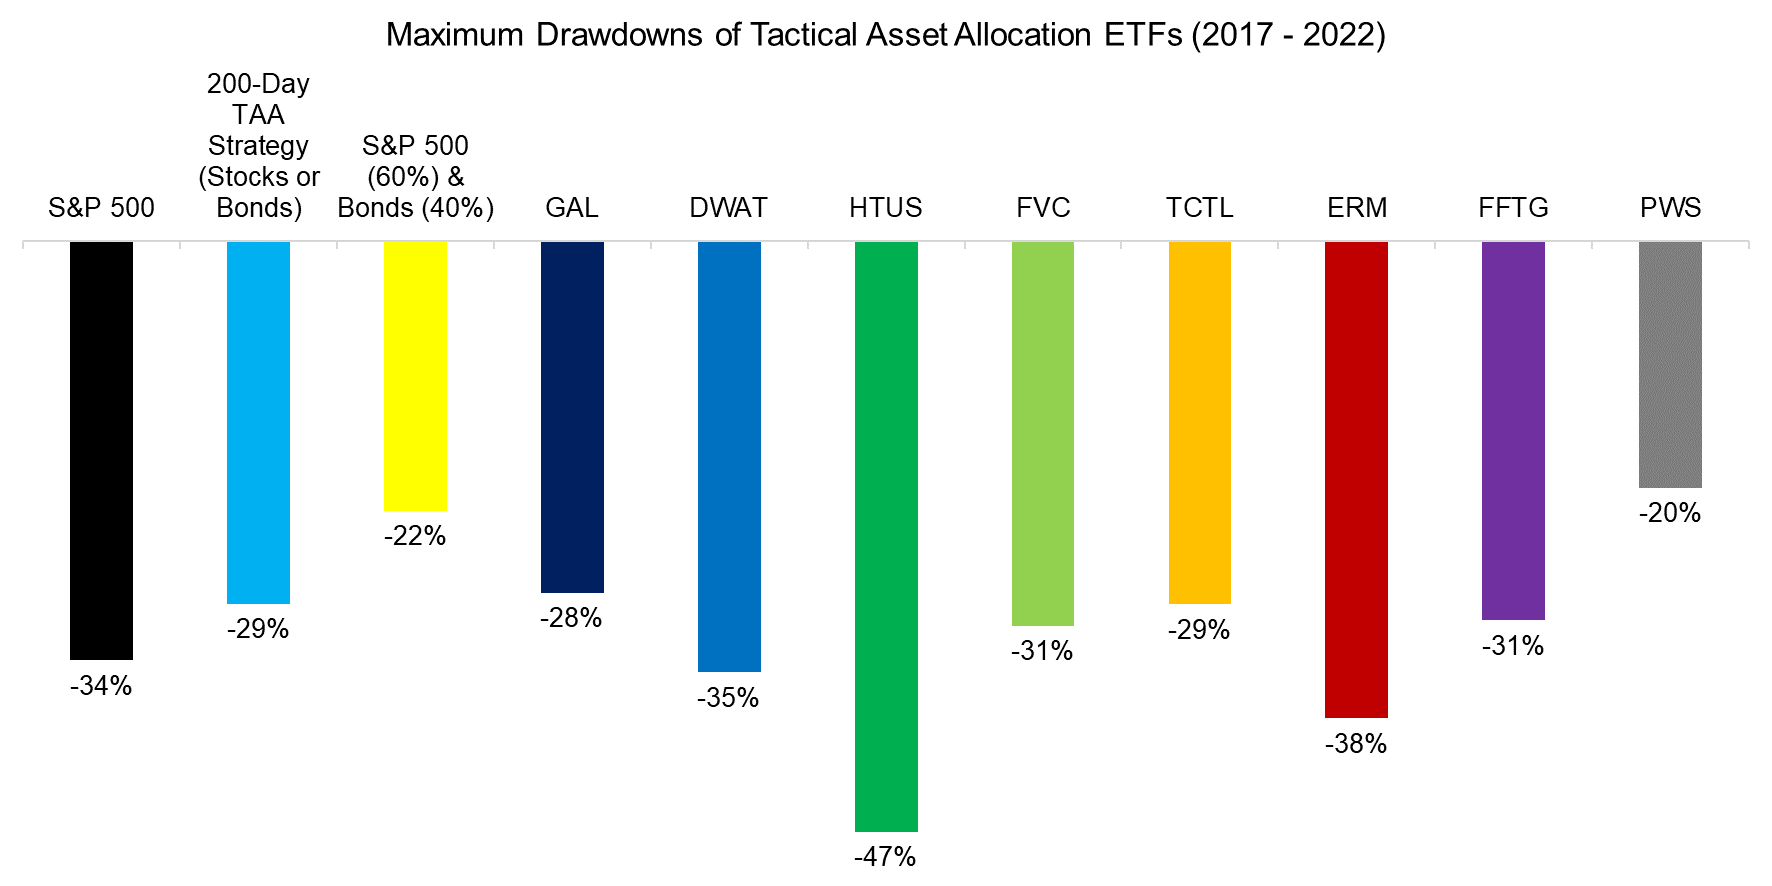 Maximum Drawdowns of Tactical Asset Allocation ETFs (2017 - 2022)